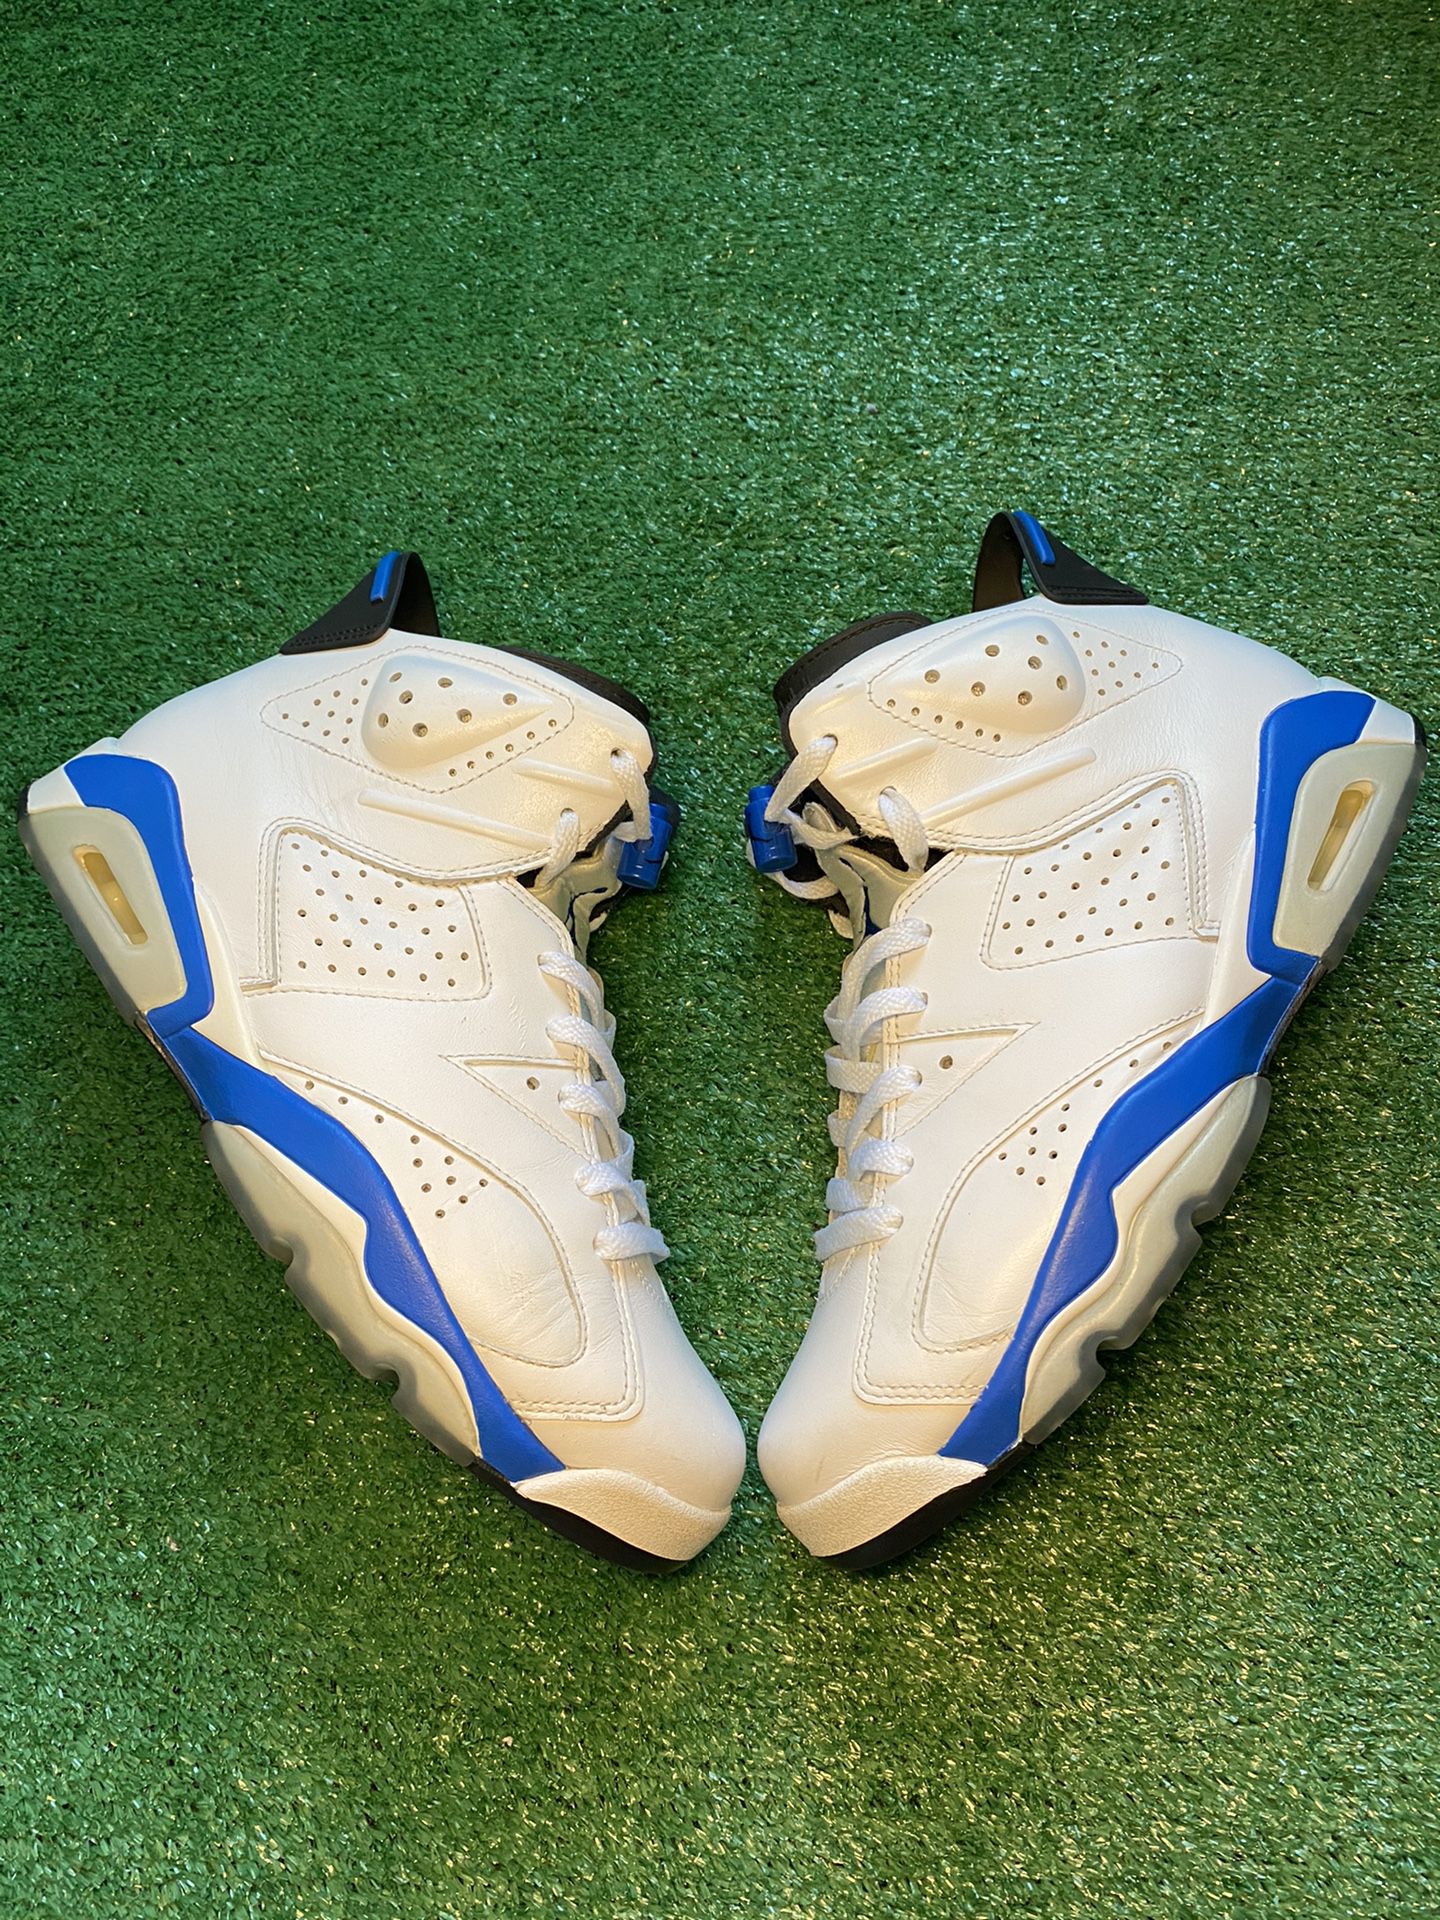 Jordan 6 sport blue size 8.5